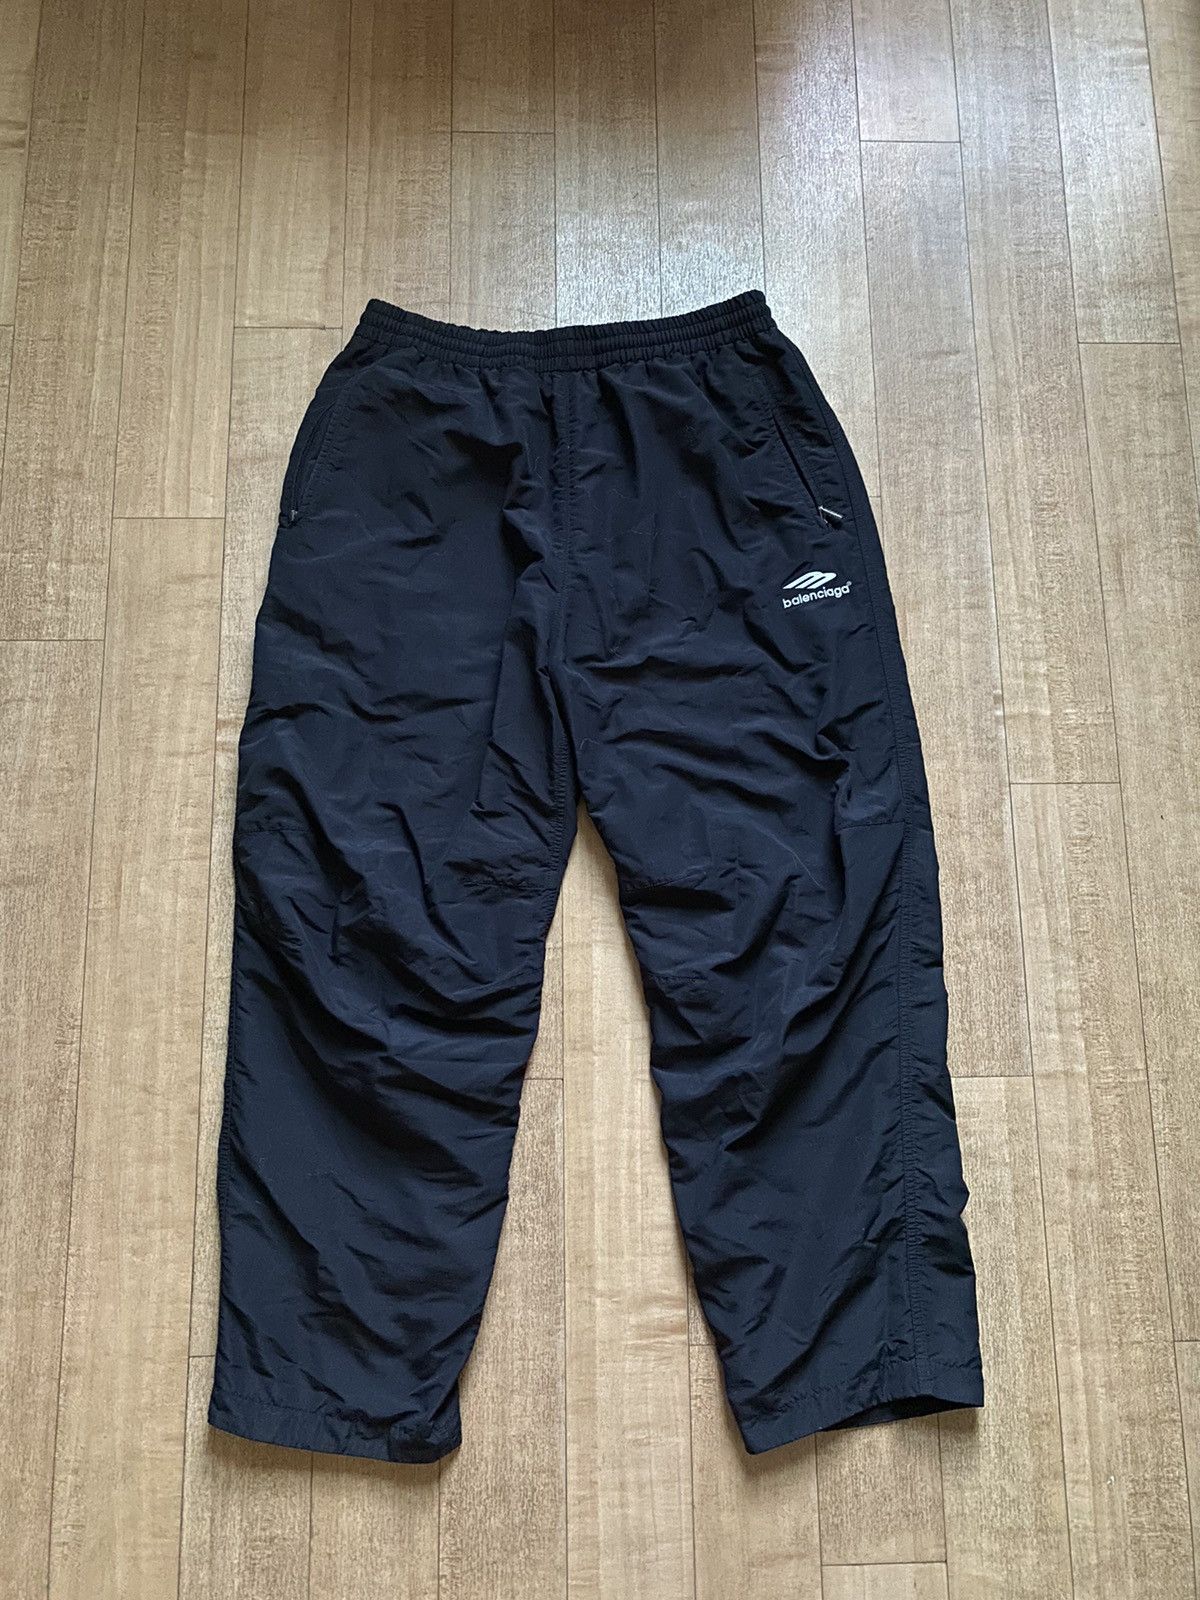 Pre-owned Balenciaga 3b Track Pants Sweatpants Black Large